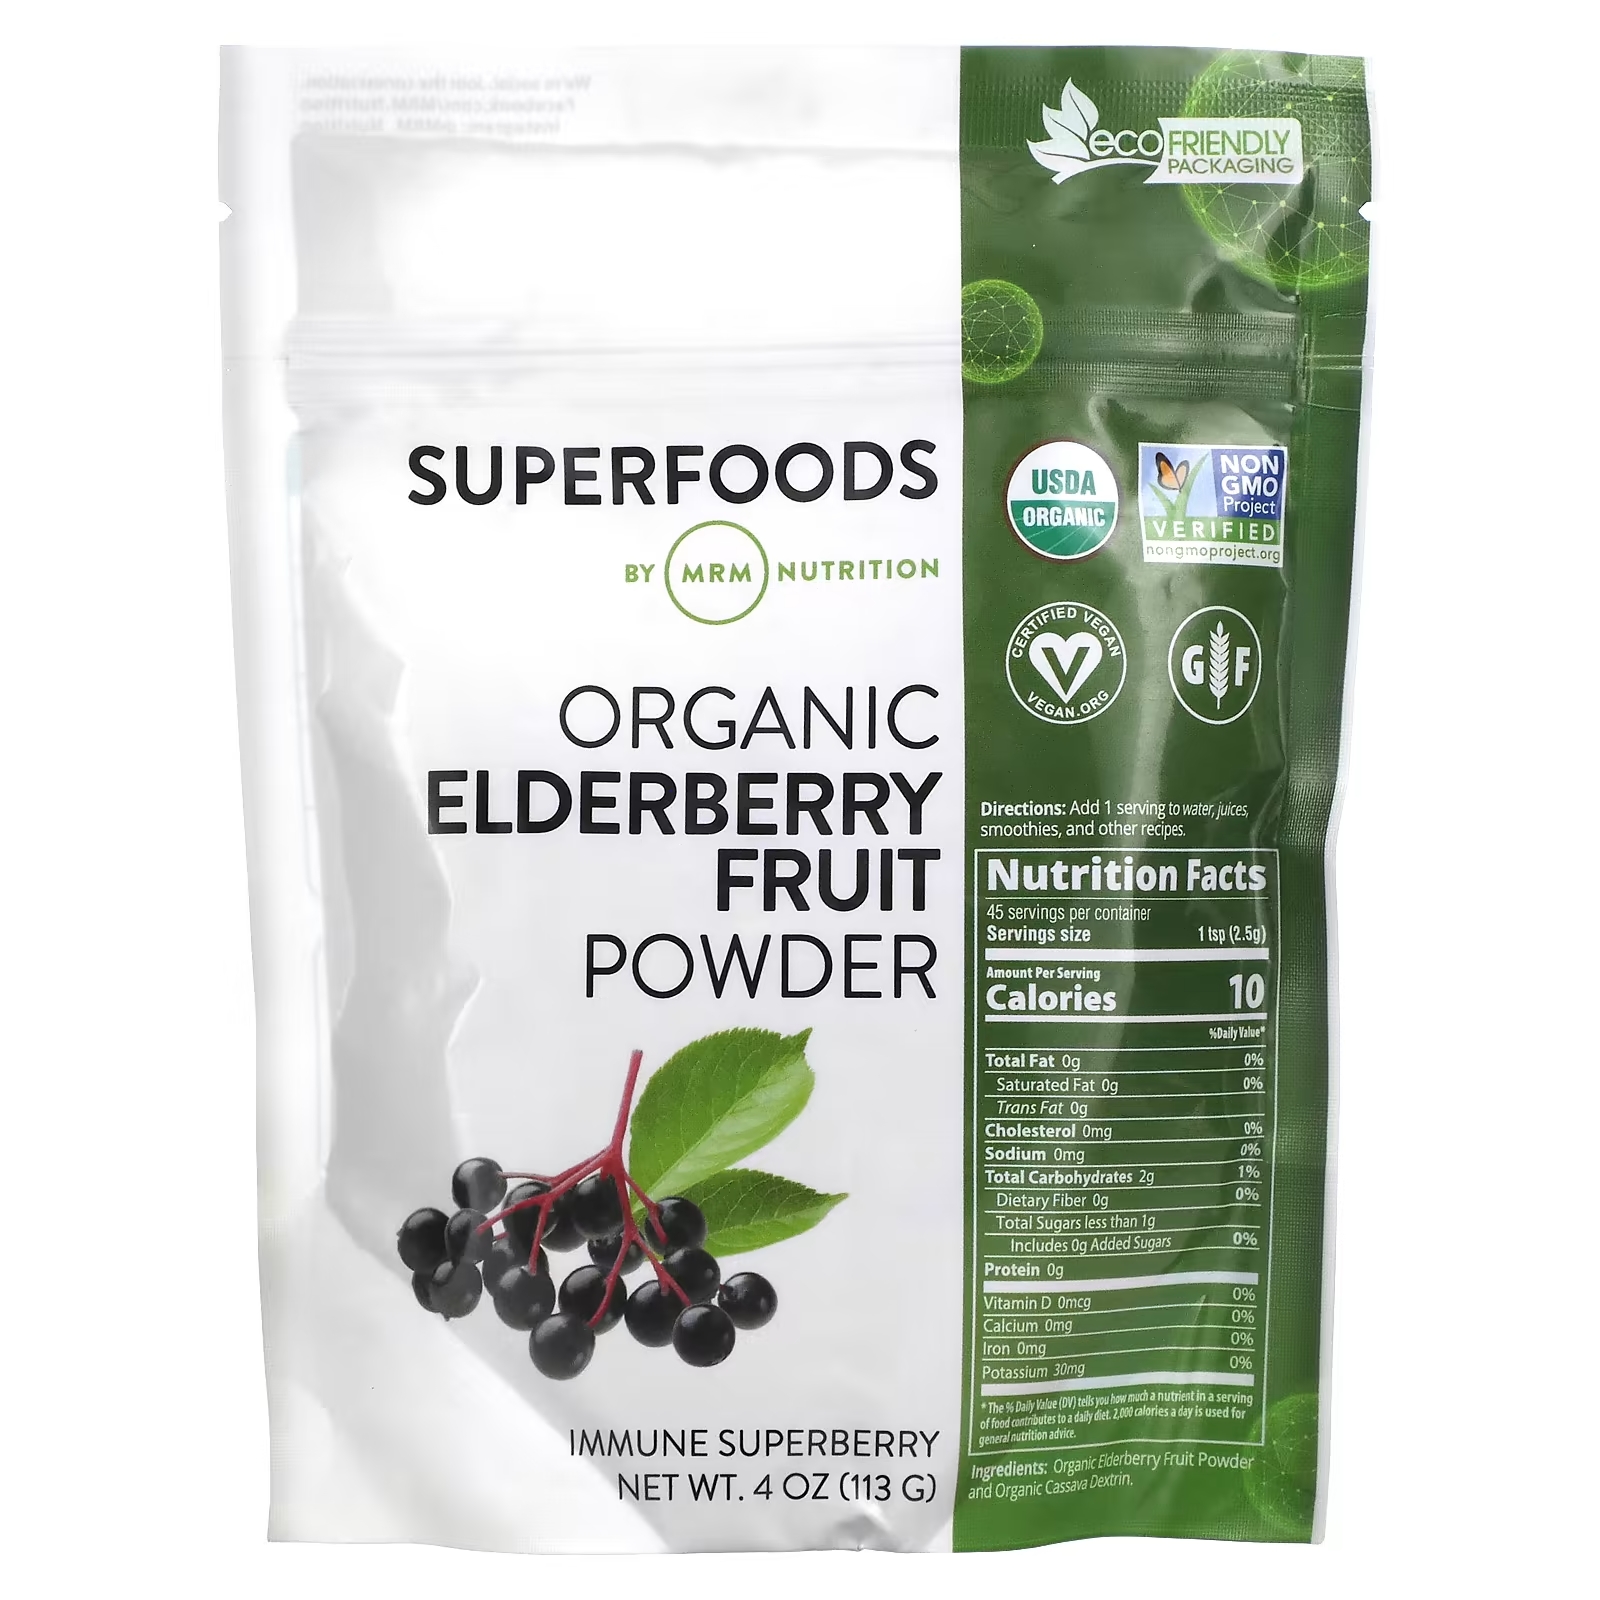 MRM Nutrition Organic Elderberry Fruit Powder, 113 г mrm nutrition organic ceylon cinnamon powder 113 г